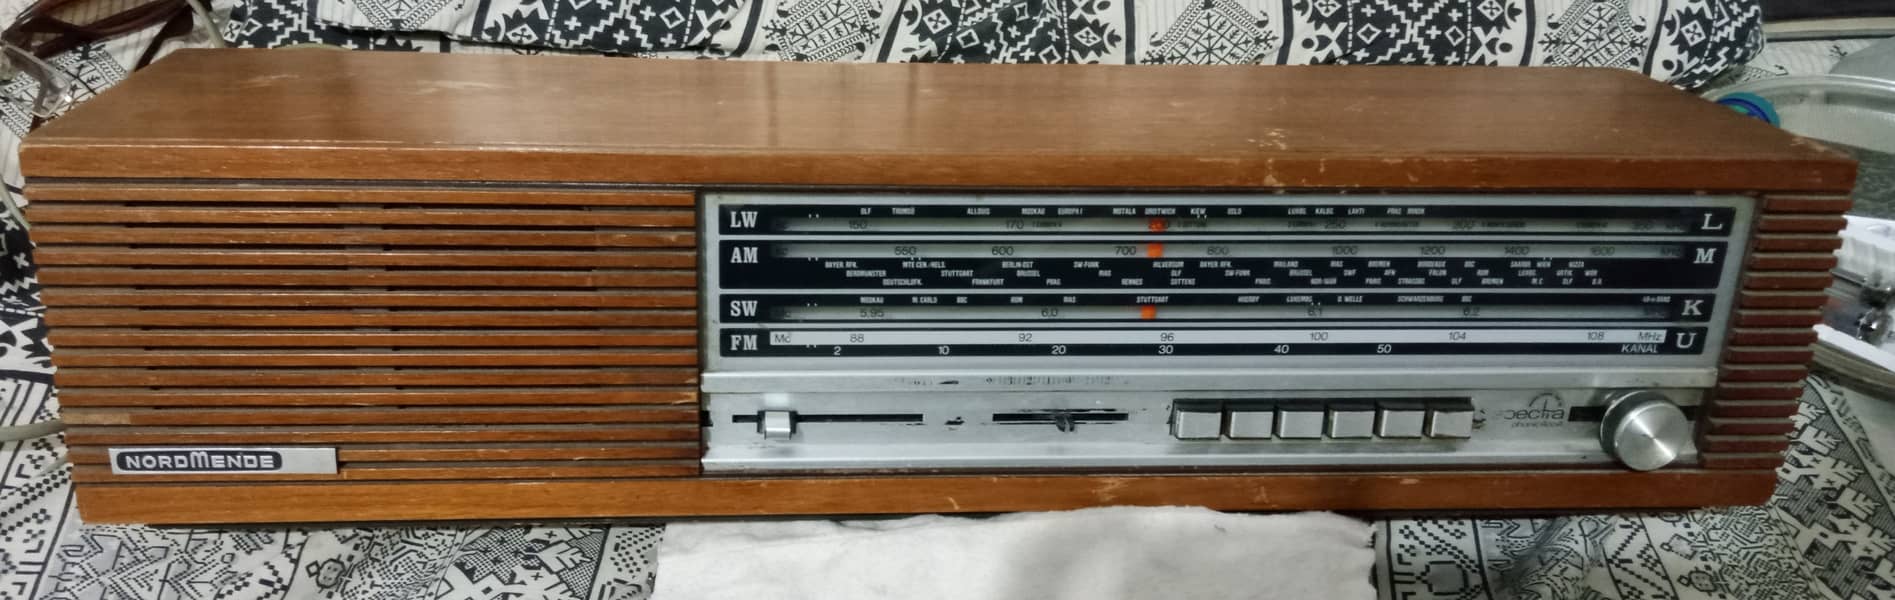 Antique  radio pakistan Normande brand Germany 2